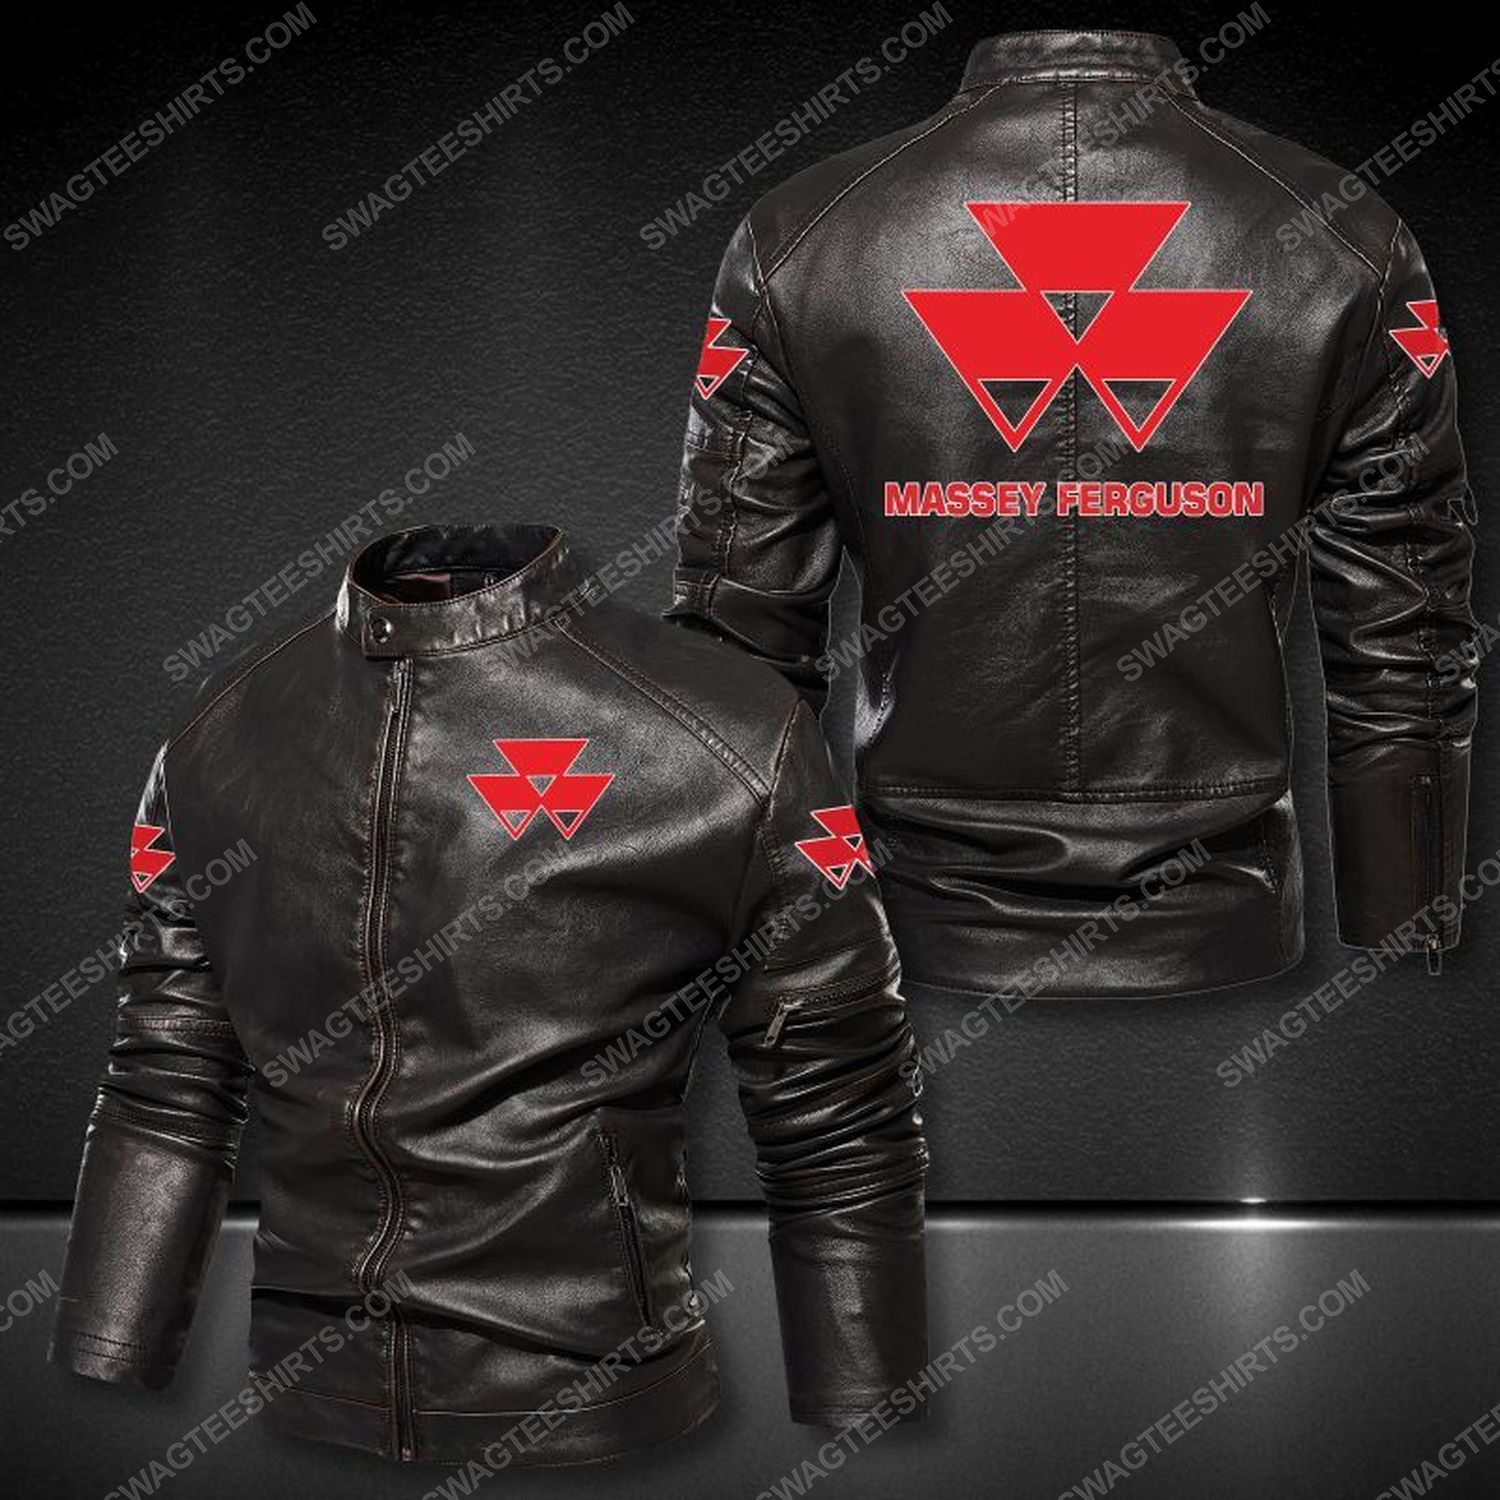 Massey ferguson limited company leather jacket 1 - Copy